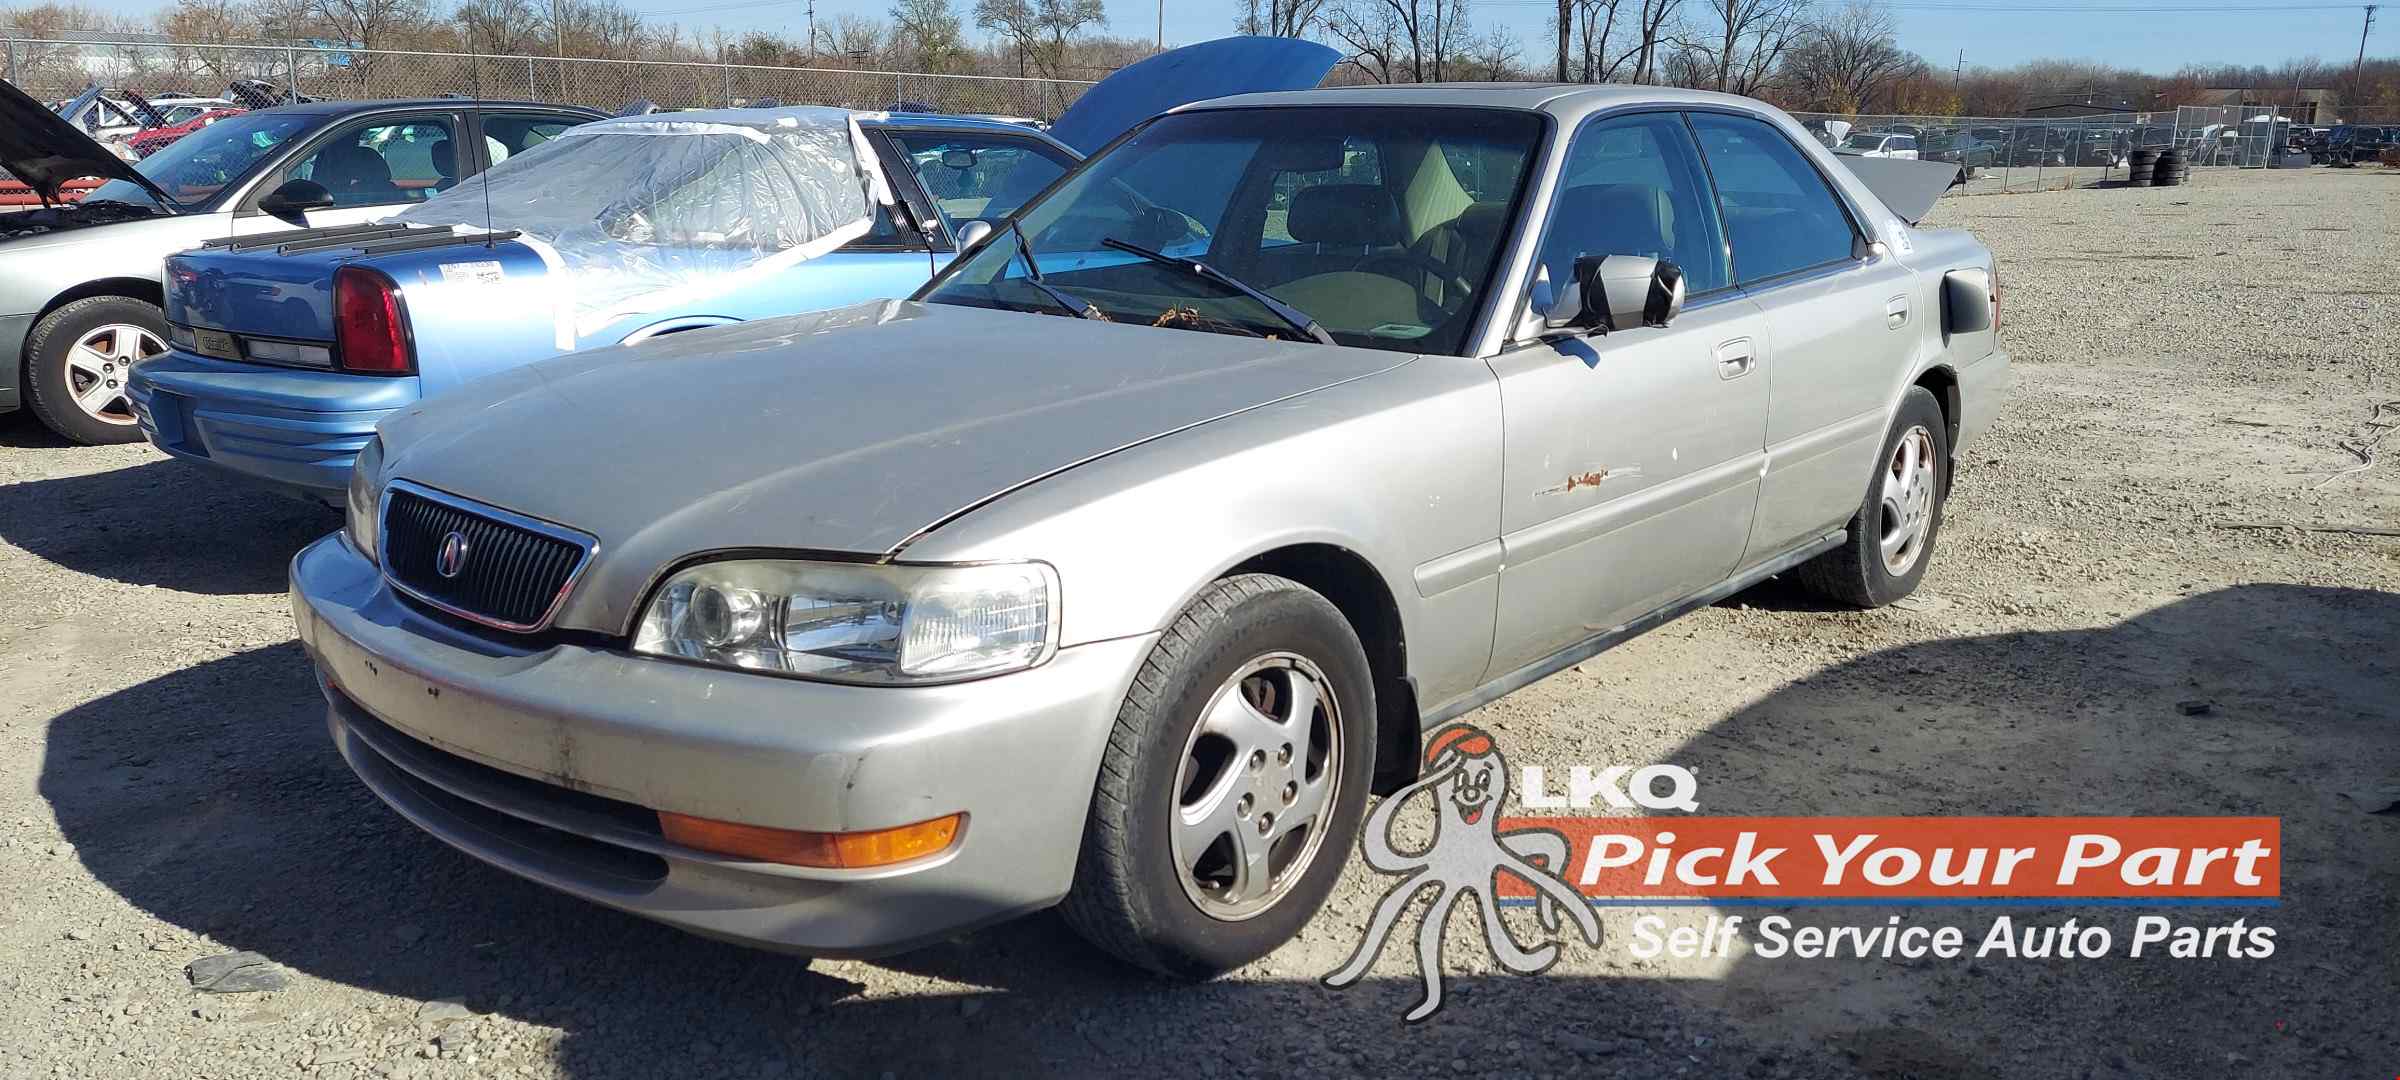 1997 Acura Tl Used Auto Parts | Dayton